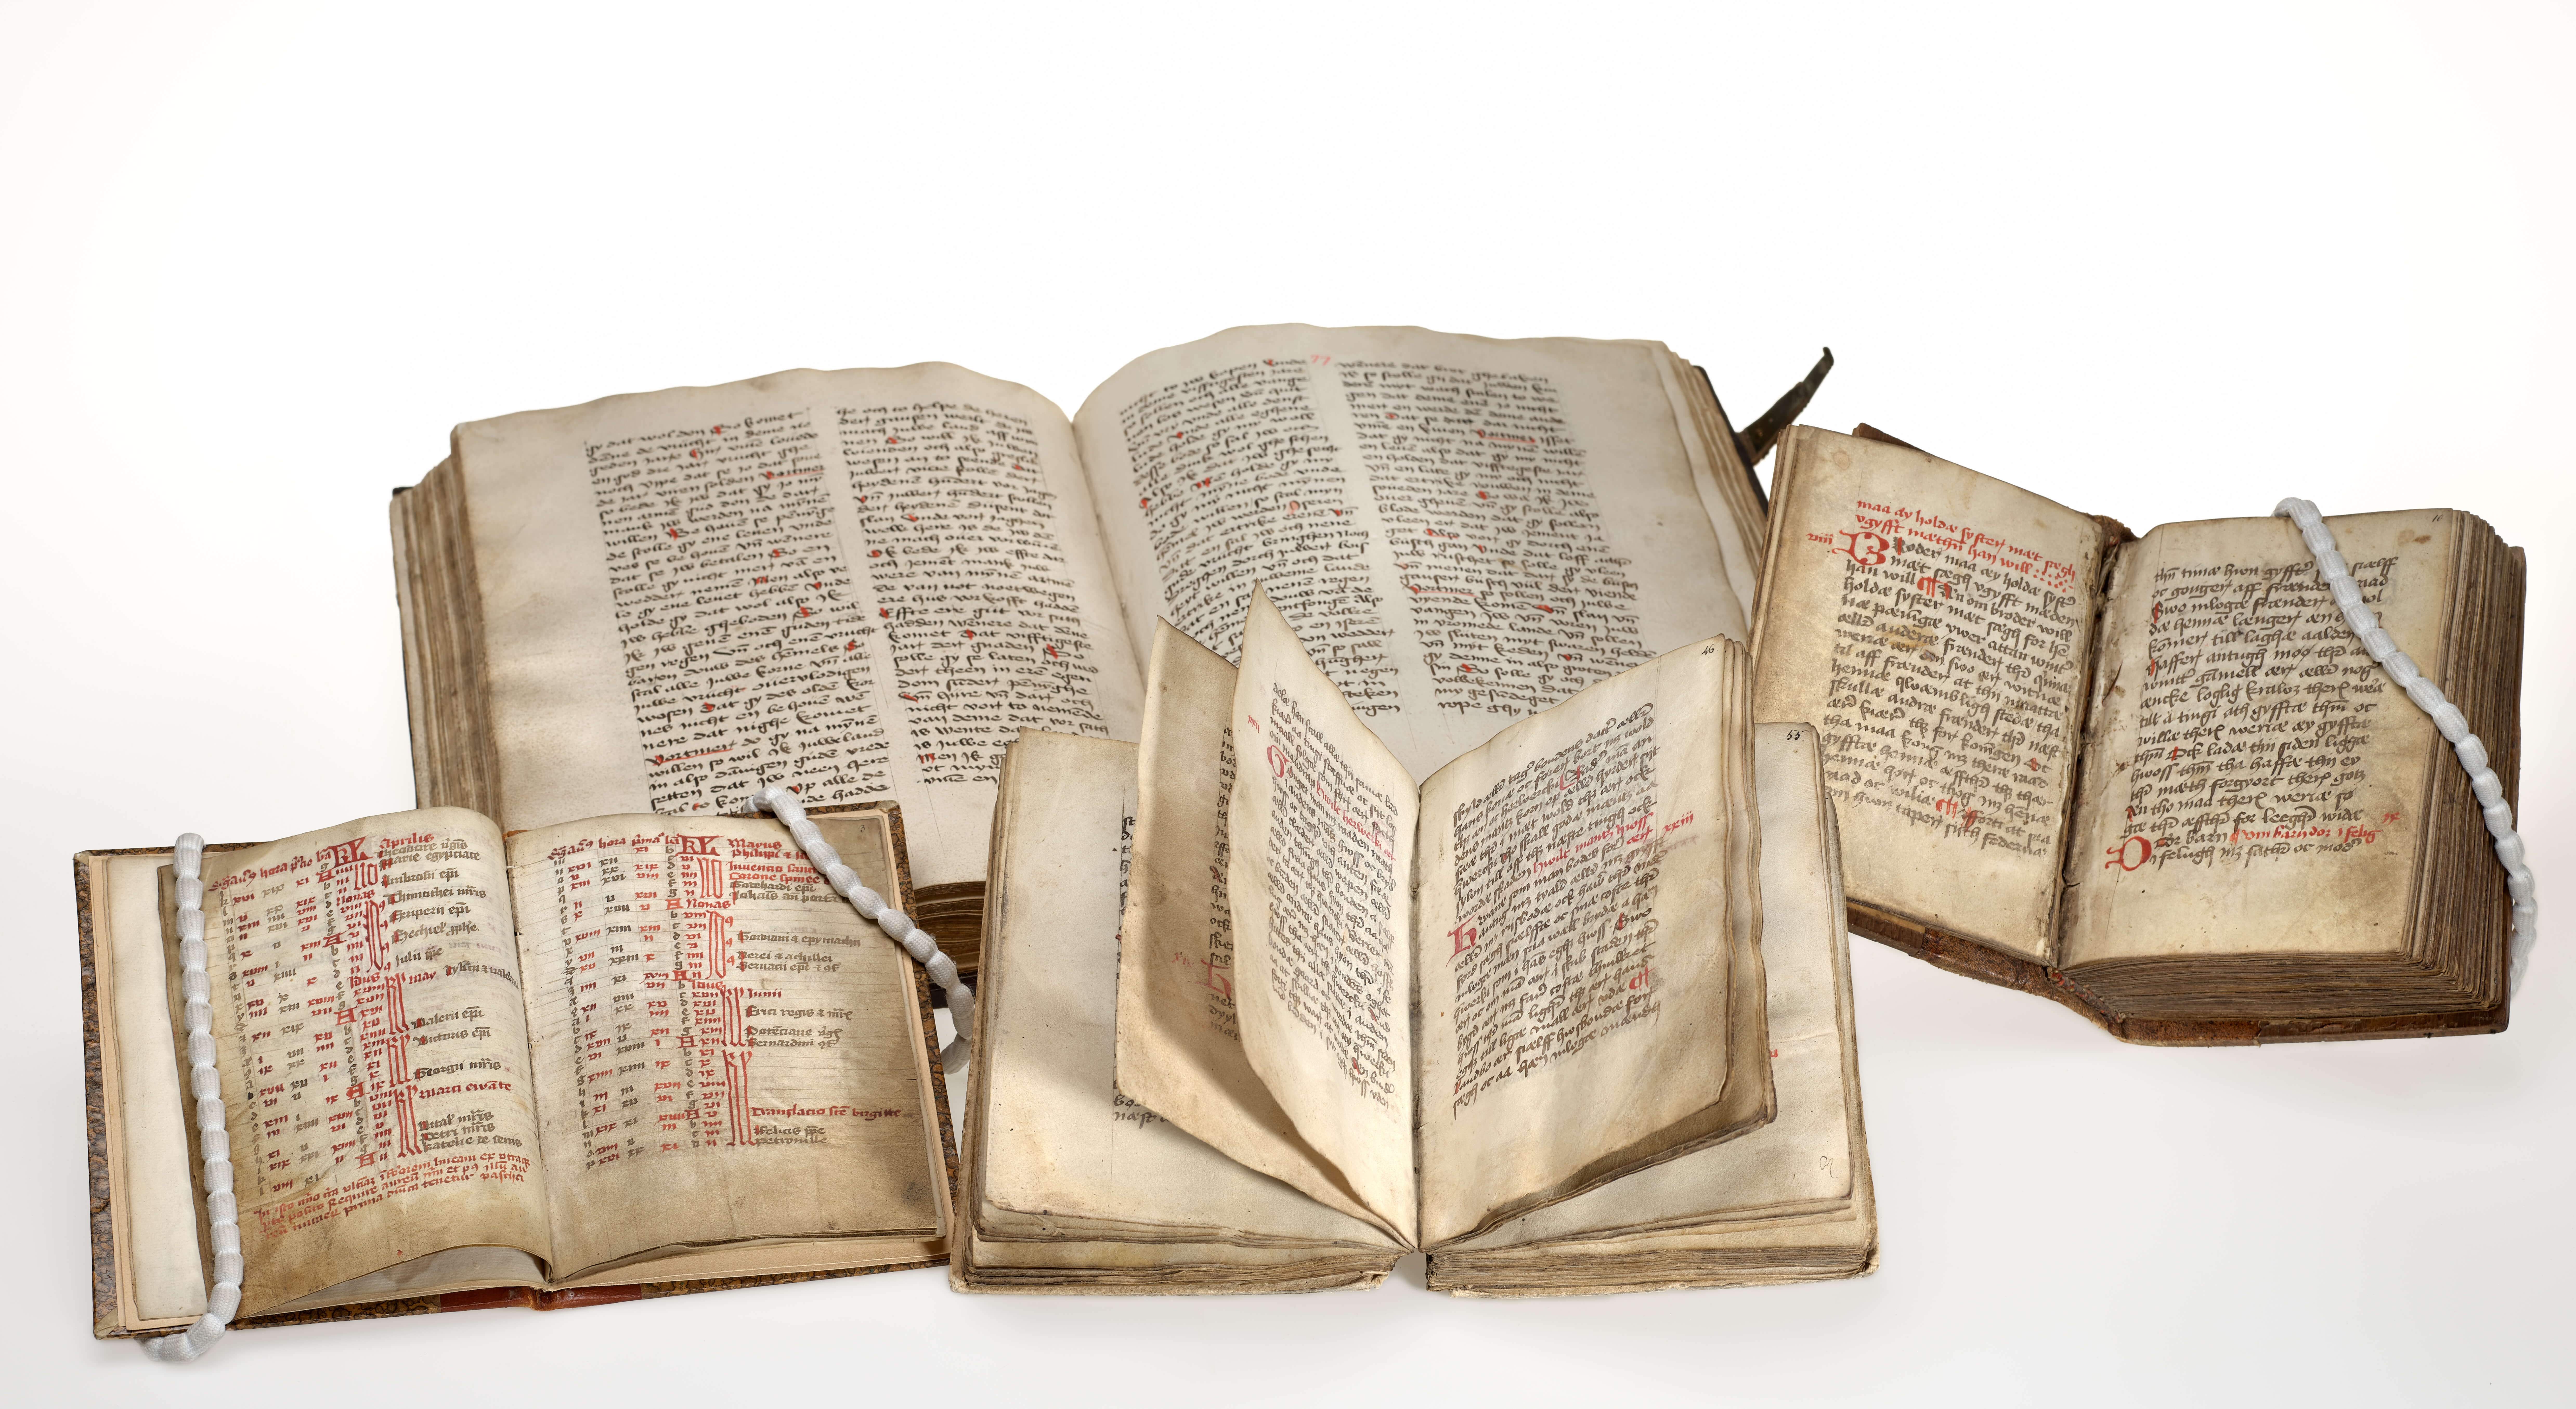 Four manuscripts